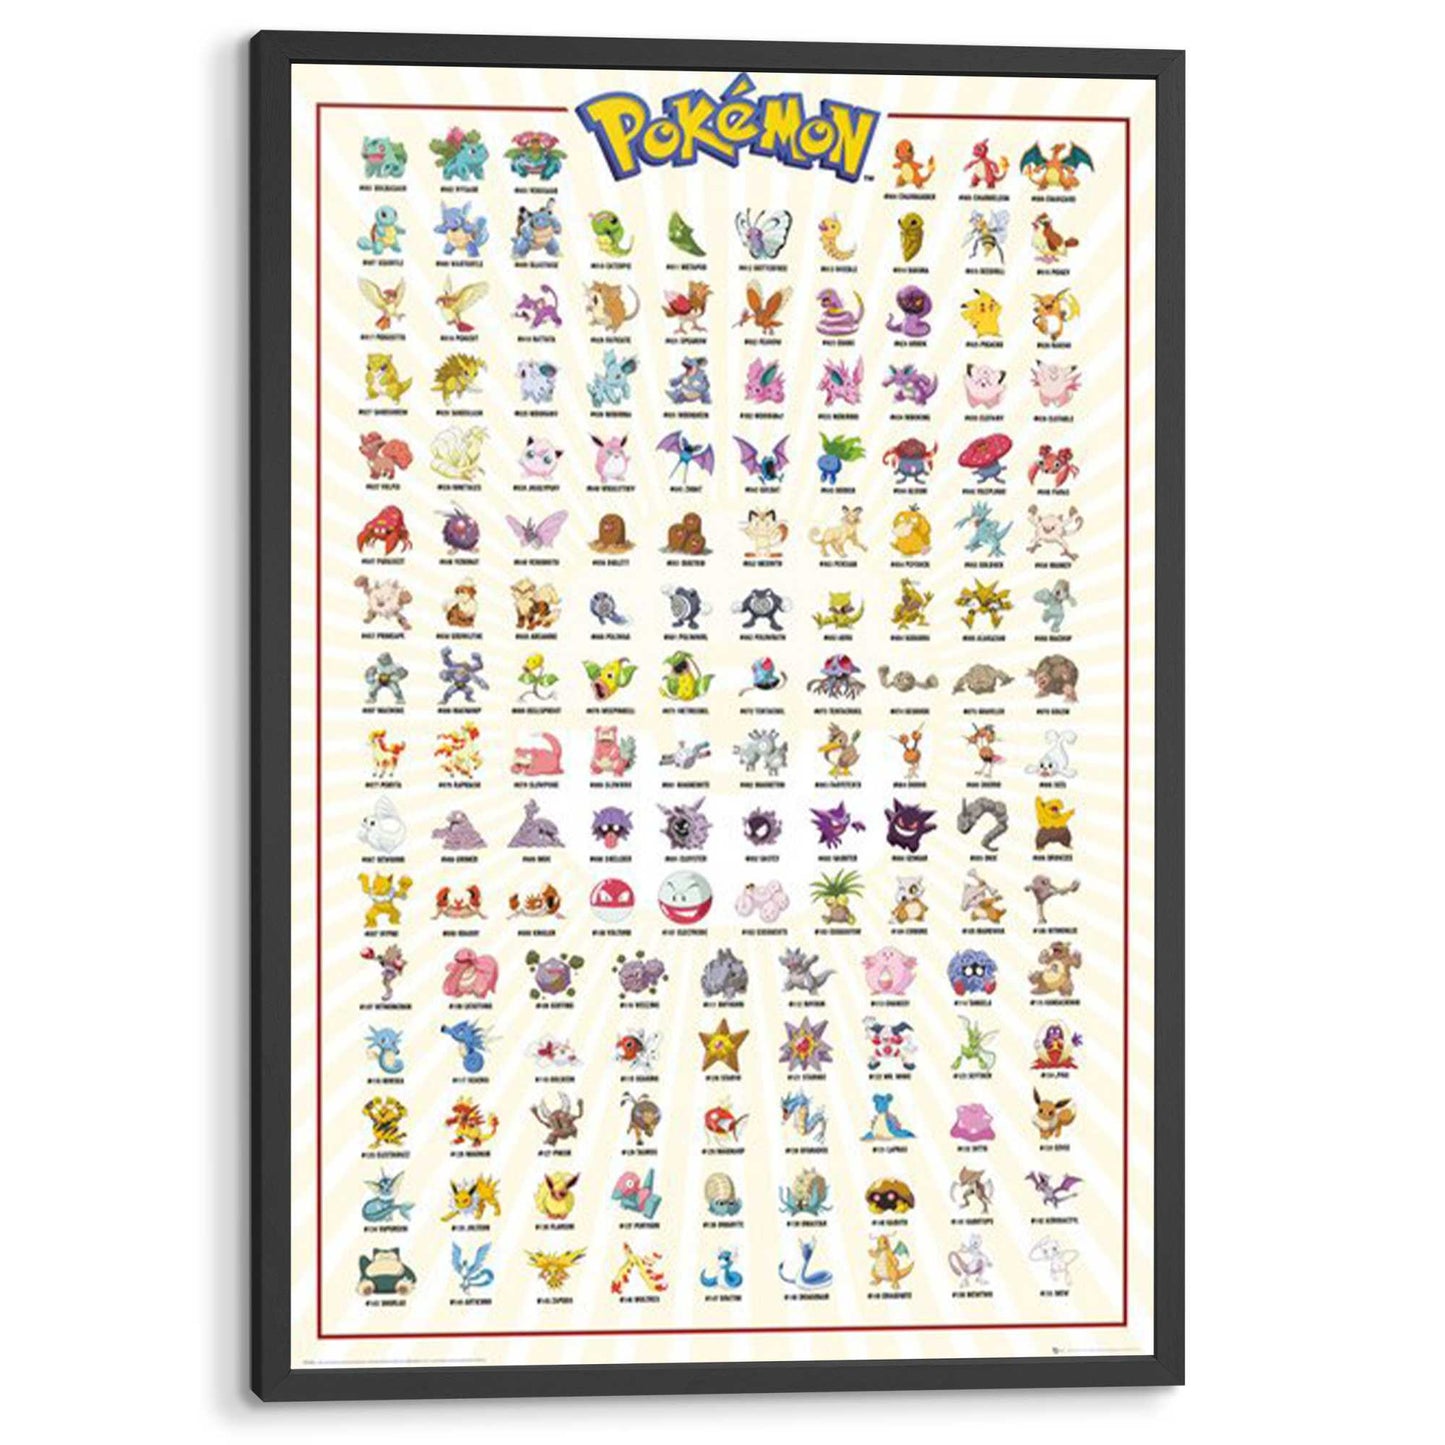 Framed poster Pokemon - kanto 151 english 94x63